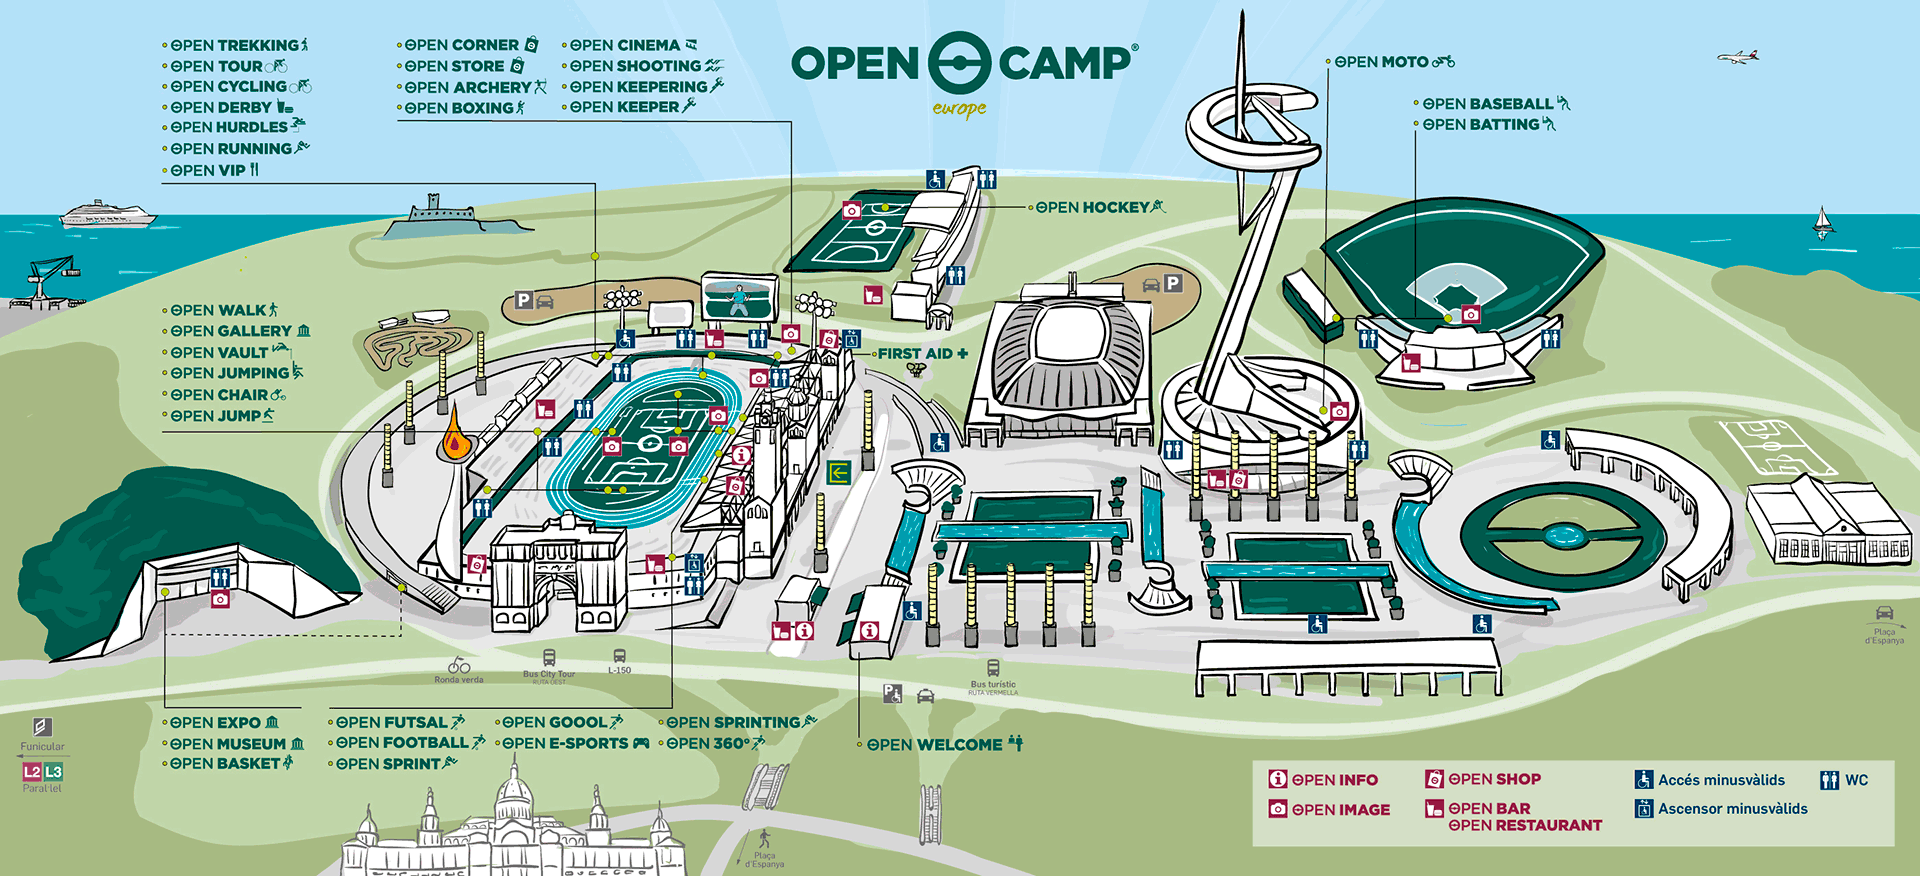 Open camp